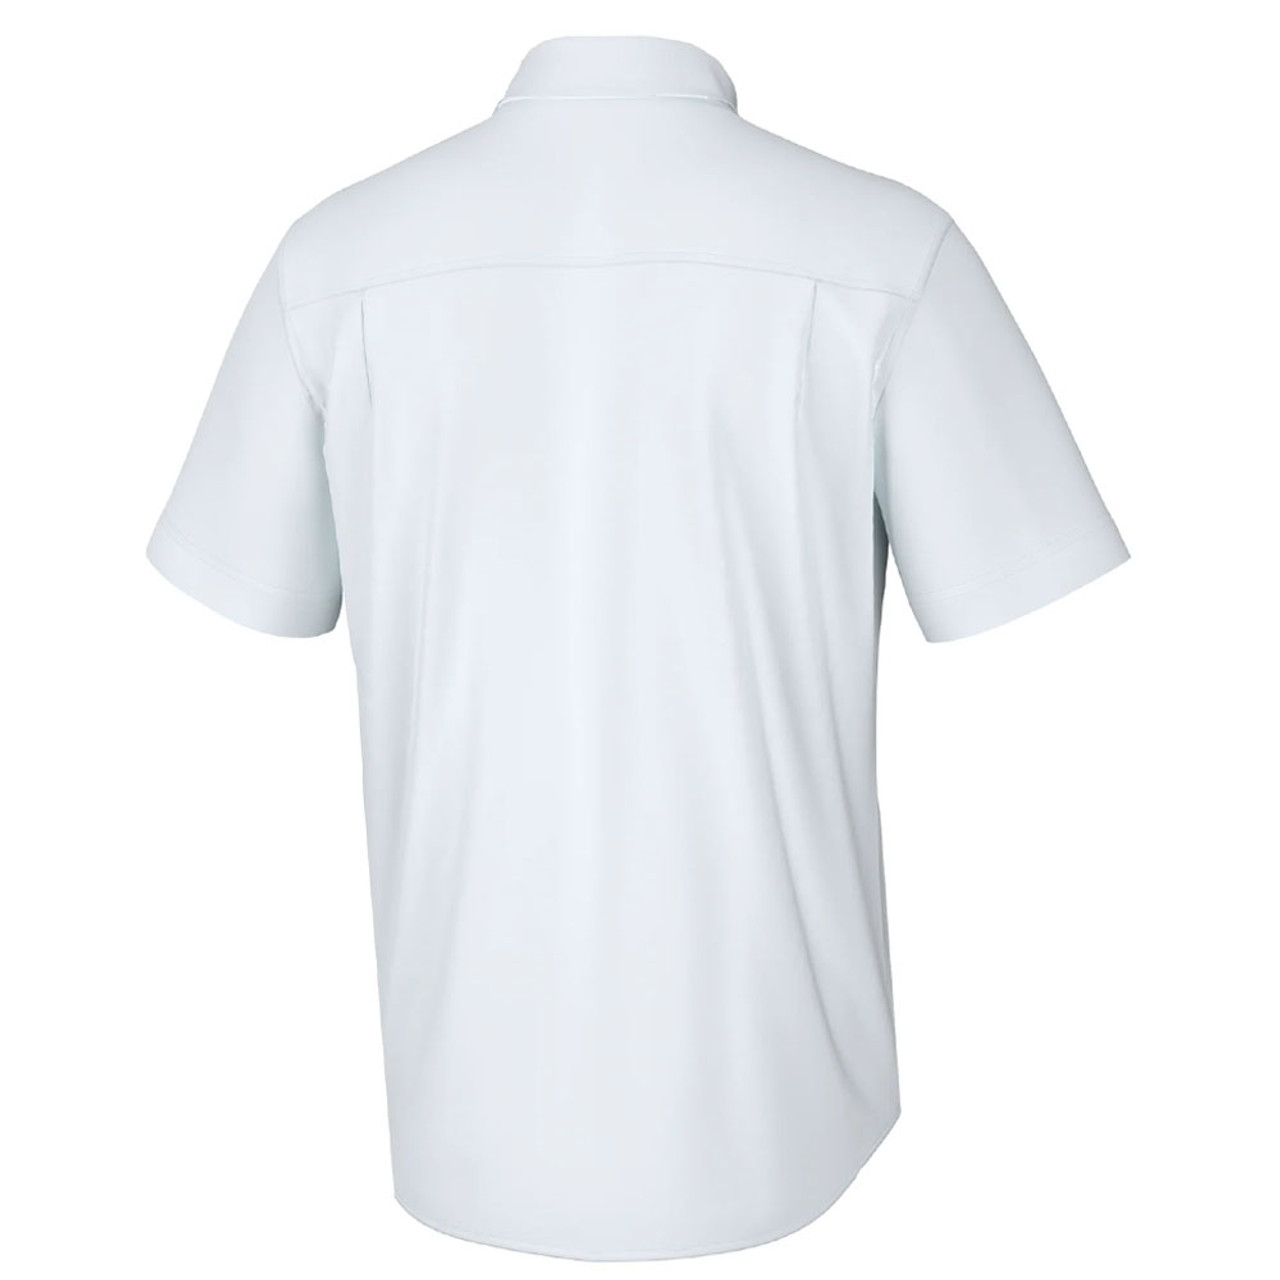 Huk Kona Solid Short Sleeve Shirt - Men's Harbor Mist L